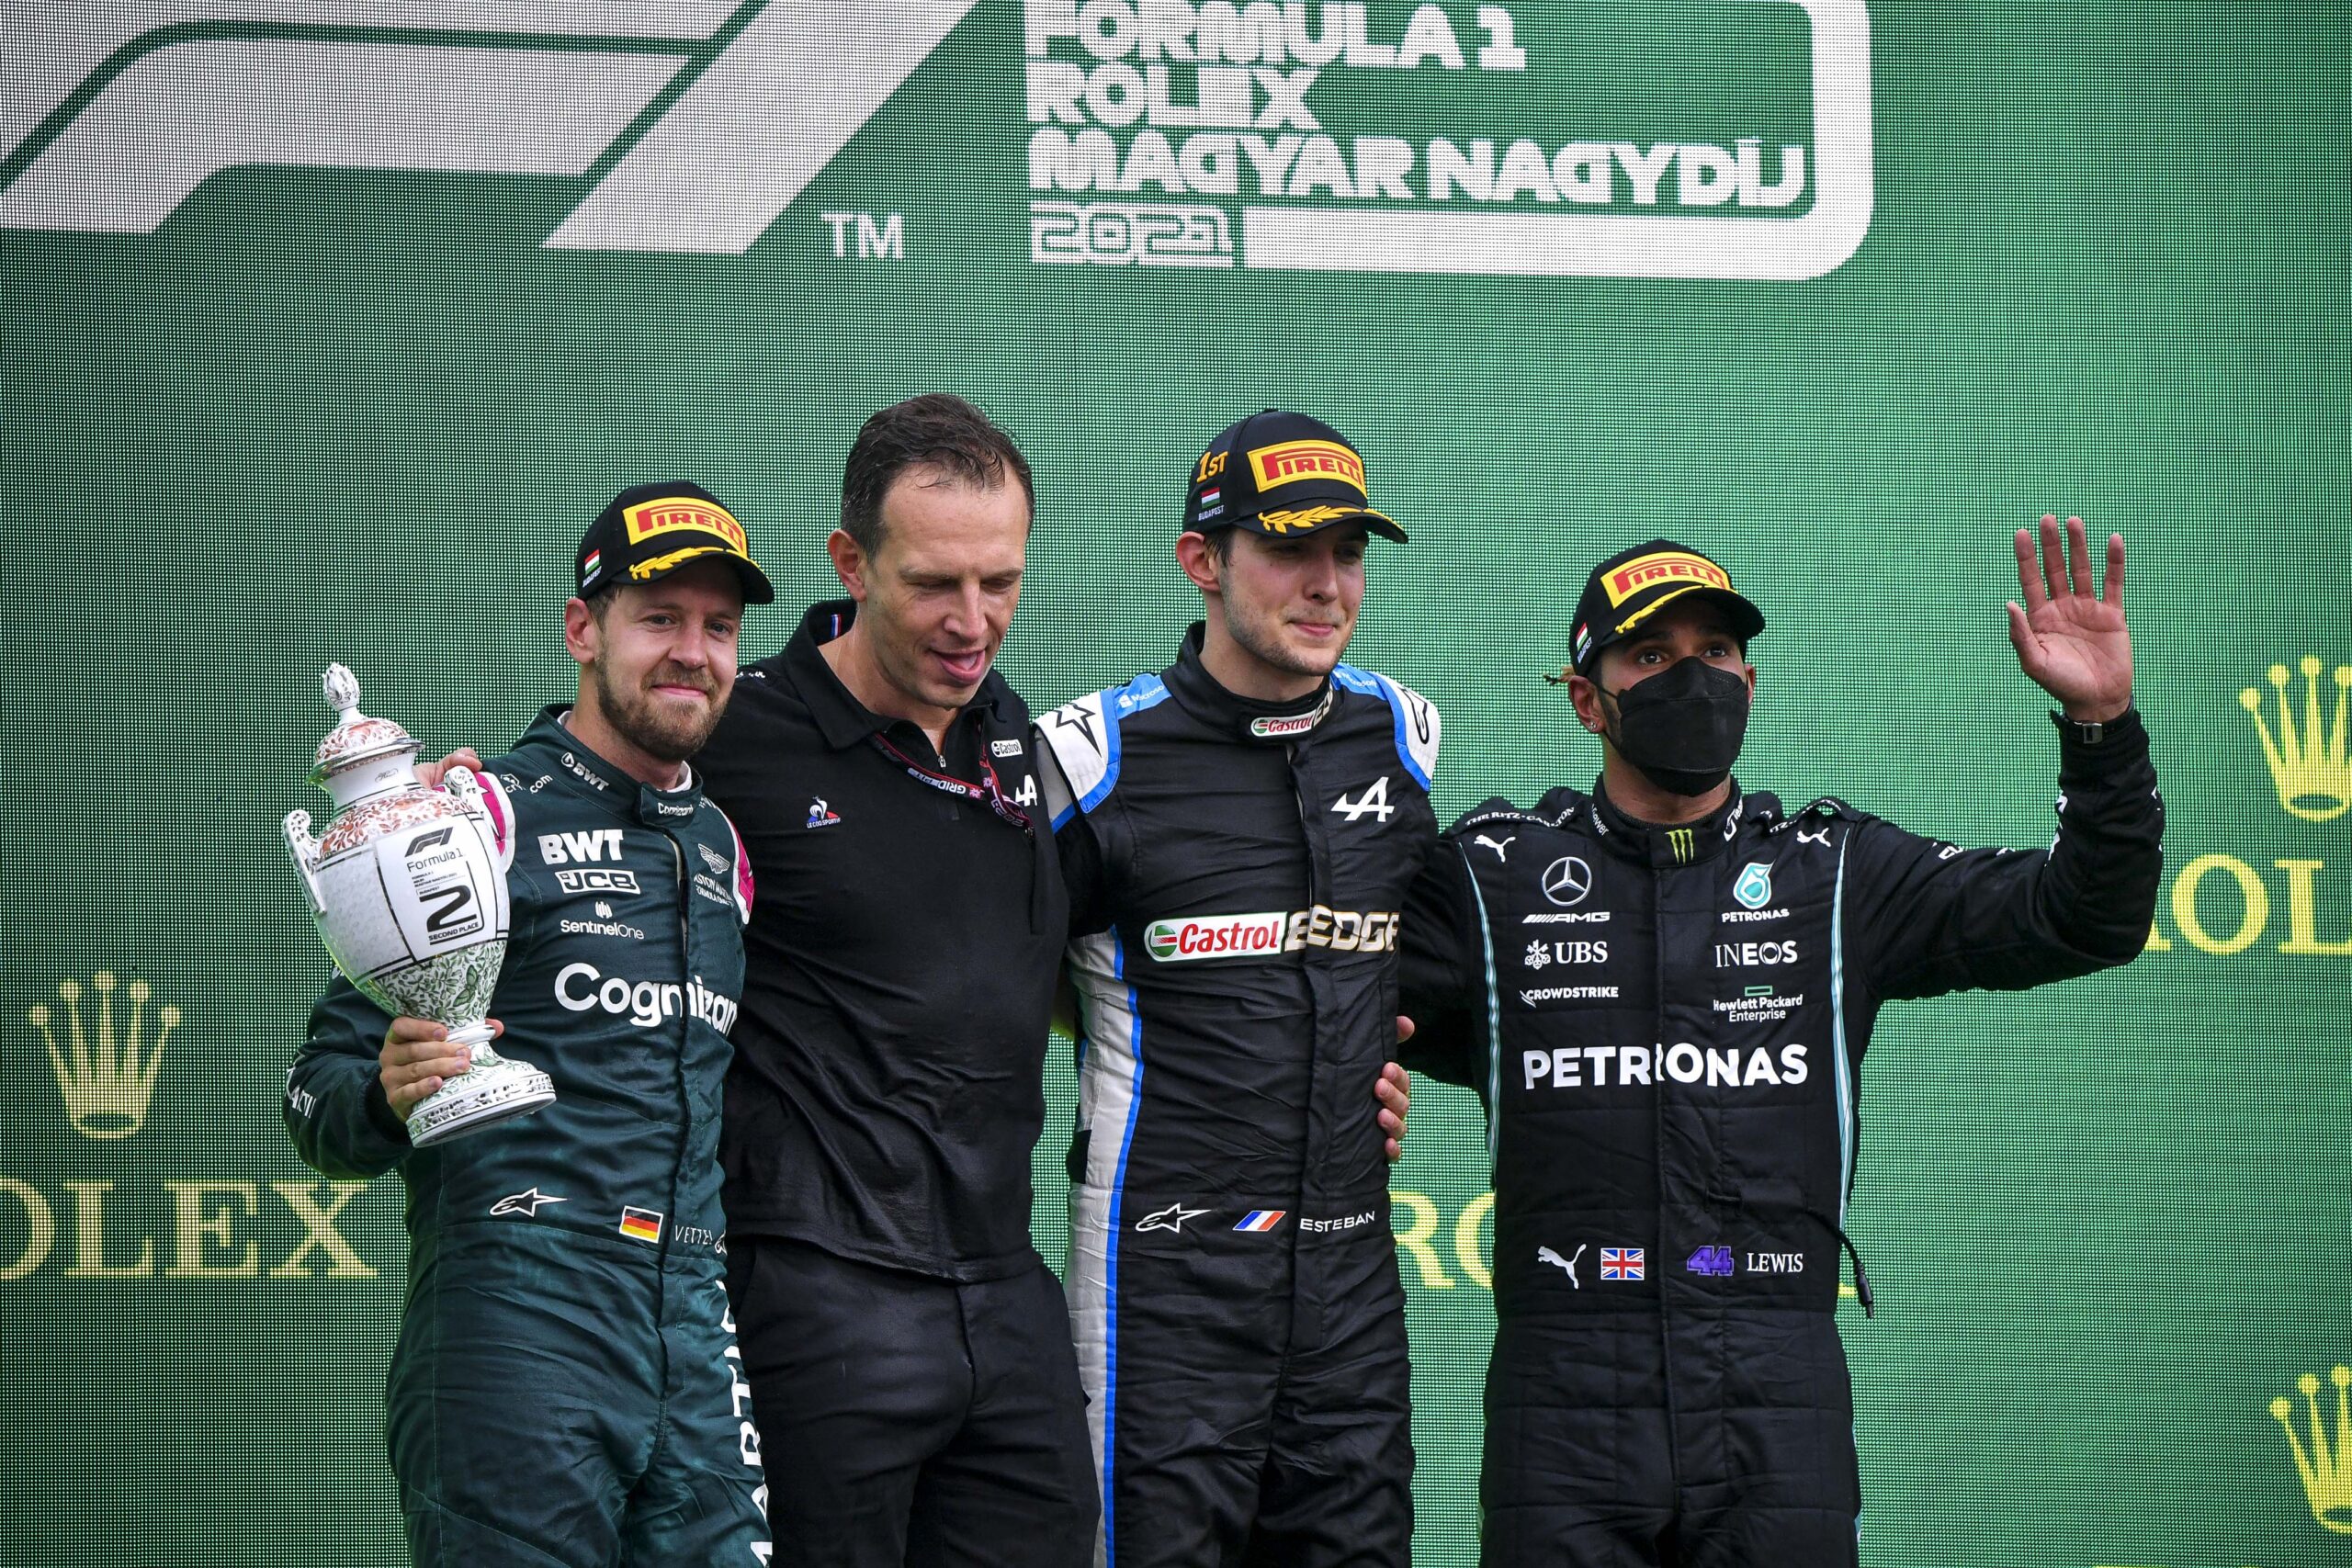 While Sebastian Vettel was disqualified following the podium celebration, Ocon and Hamilton enjoyed a Hungarian podium celebration. (Photo: LAT Images)